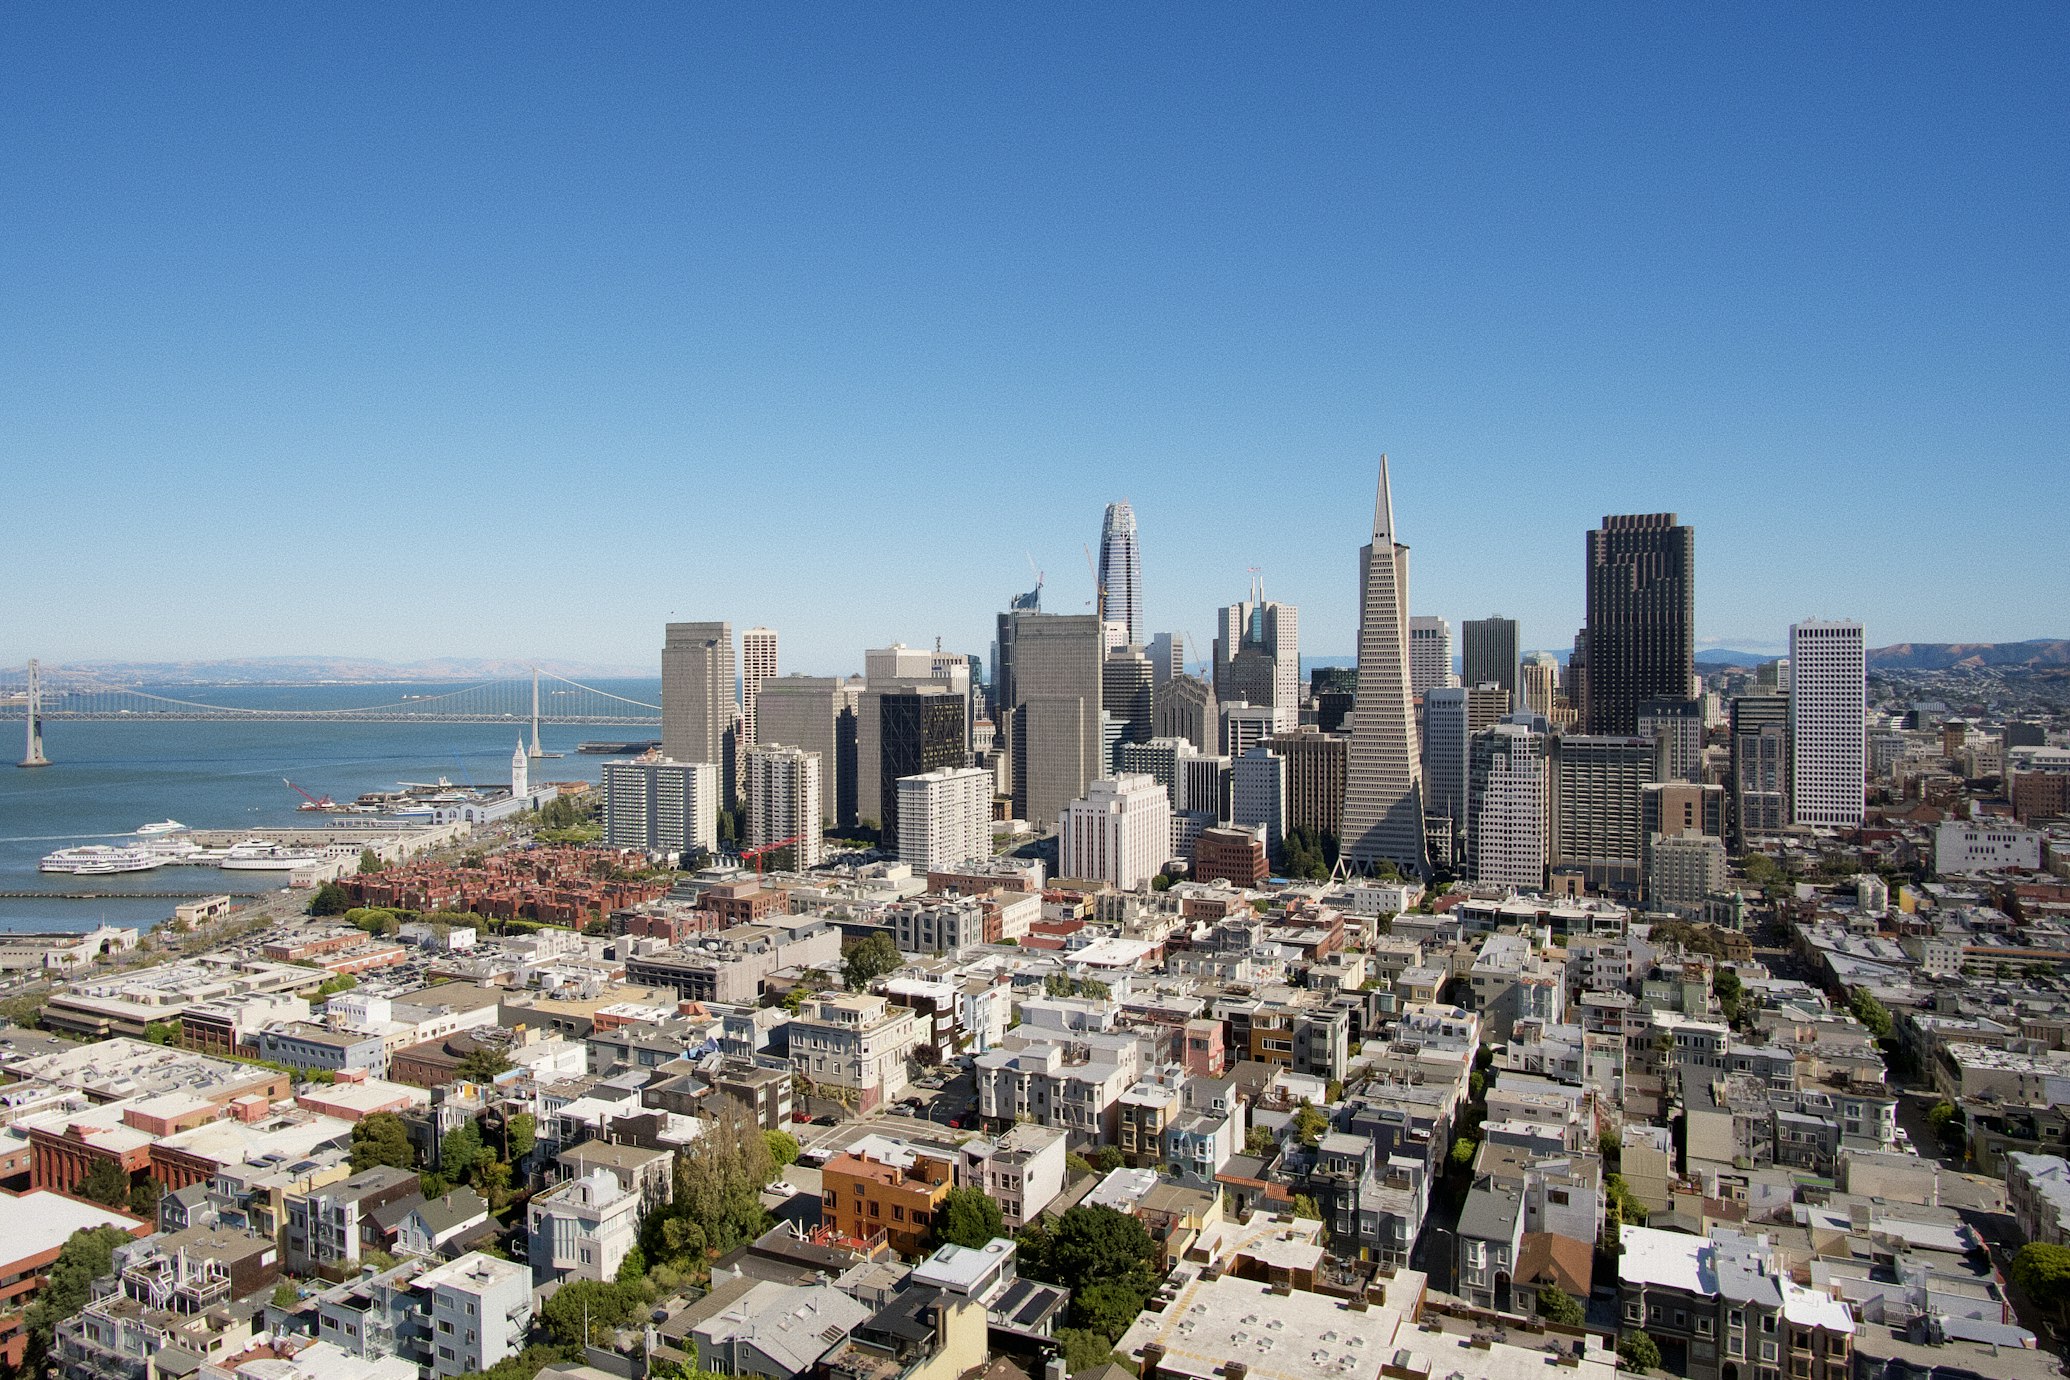 San Francisco Towers